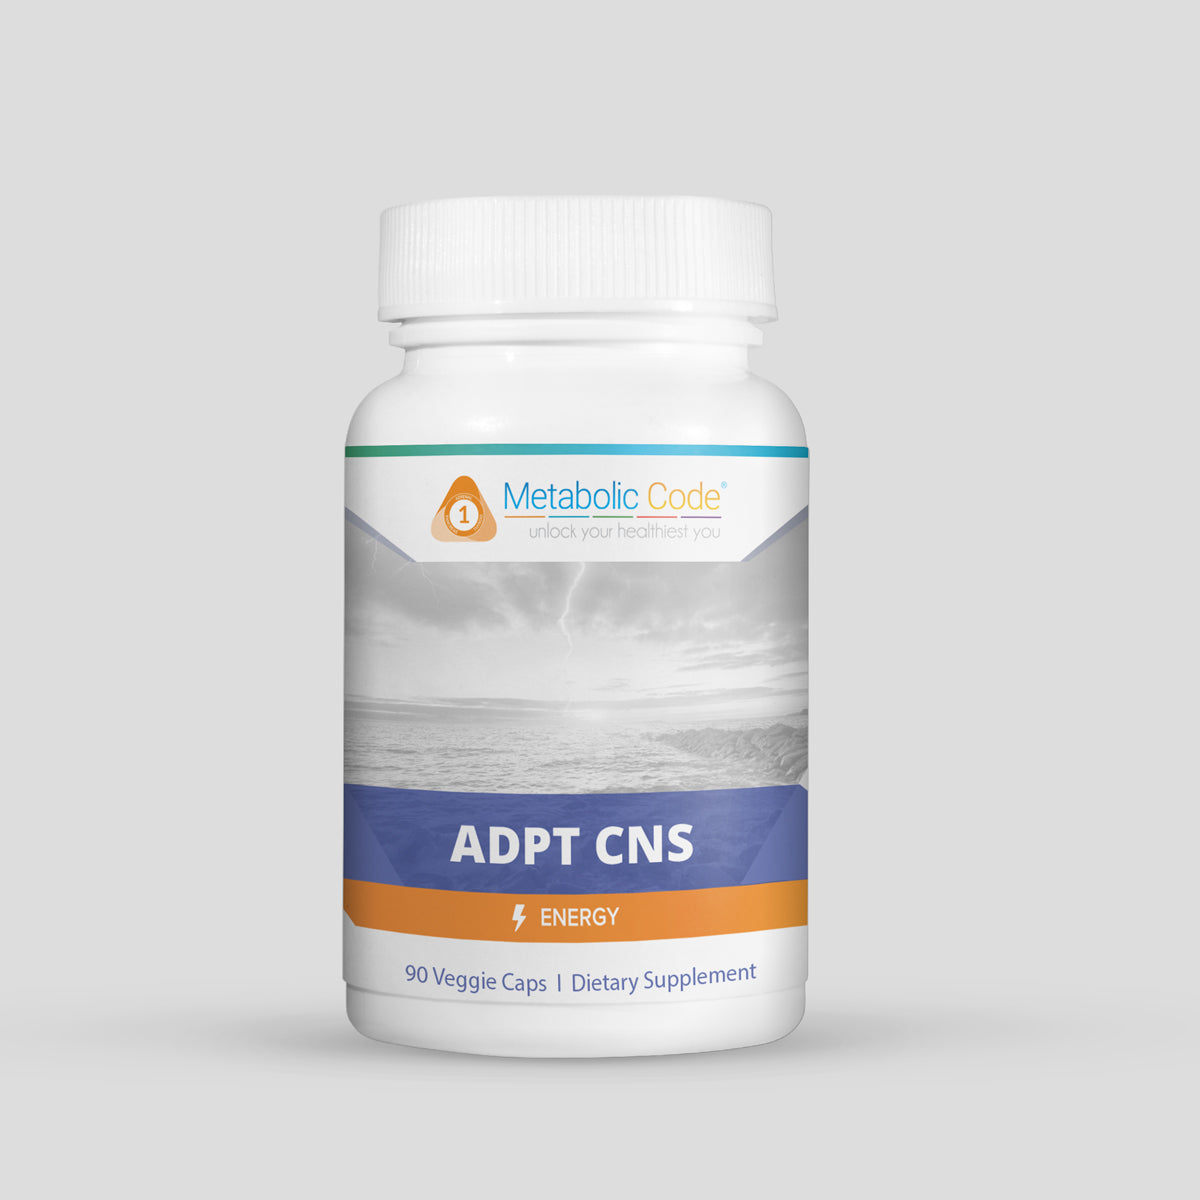 ADPT CNS - LaValle Performance Health